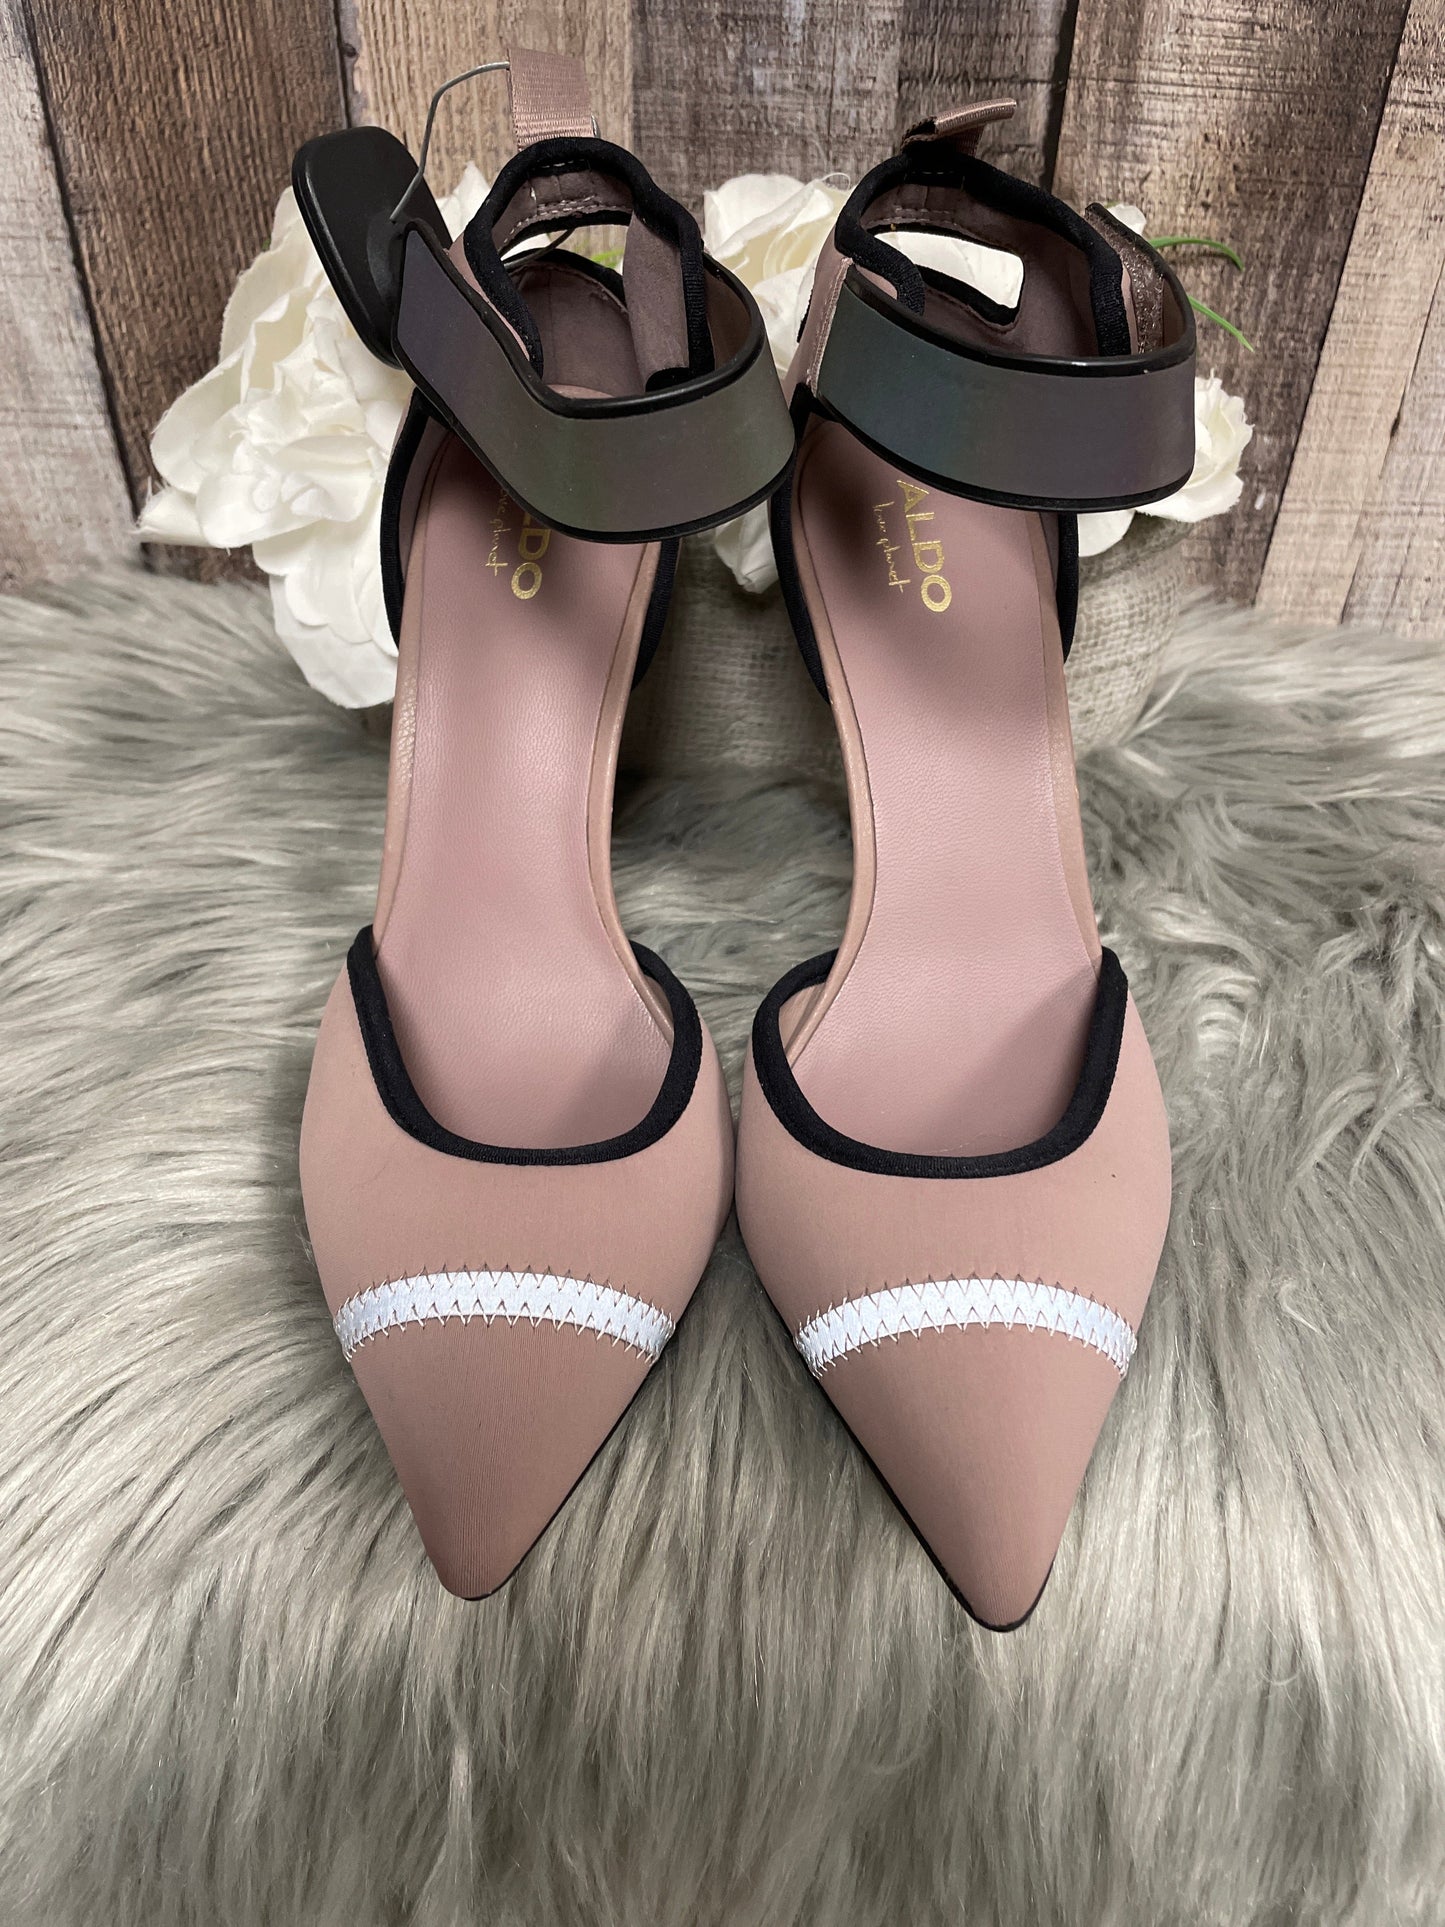 Shoes Heels Stiletto By Aldo  Size: 9